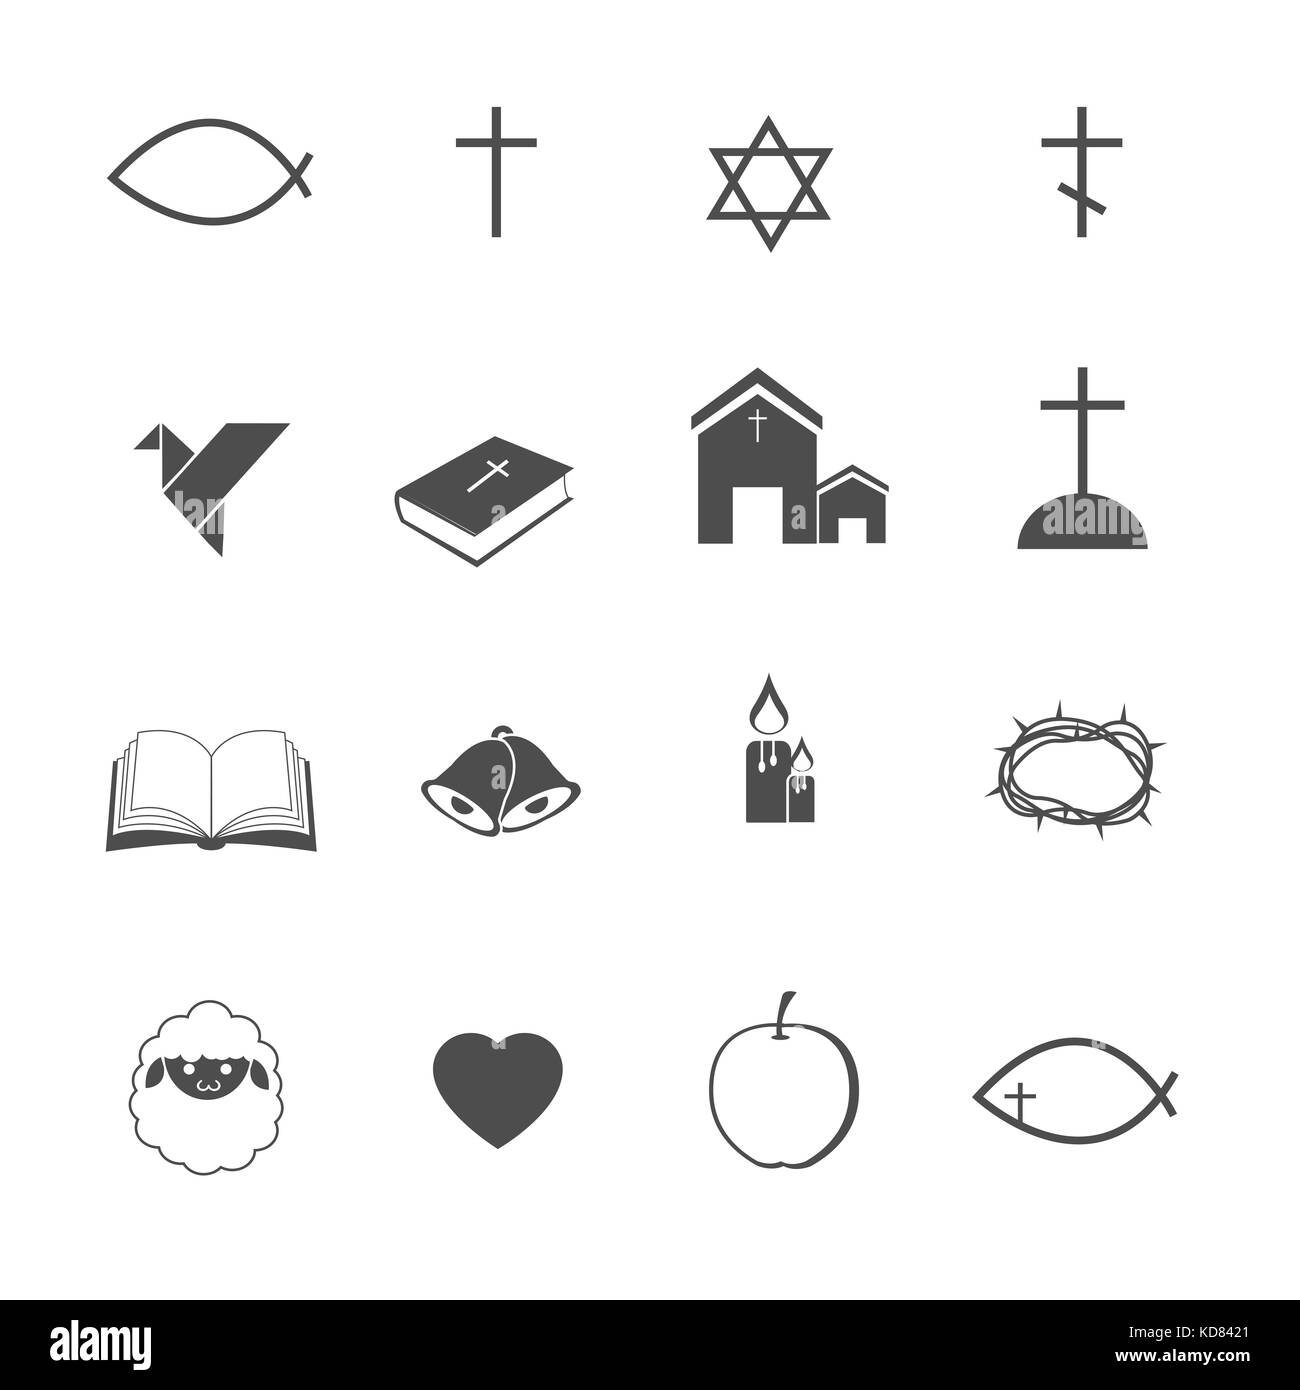 christian symbol icons set vector Stock Photo